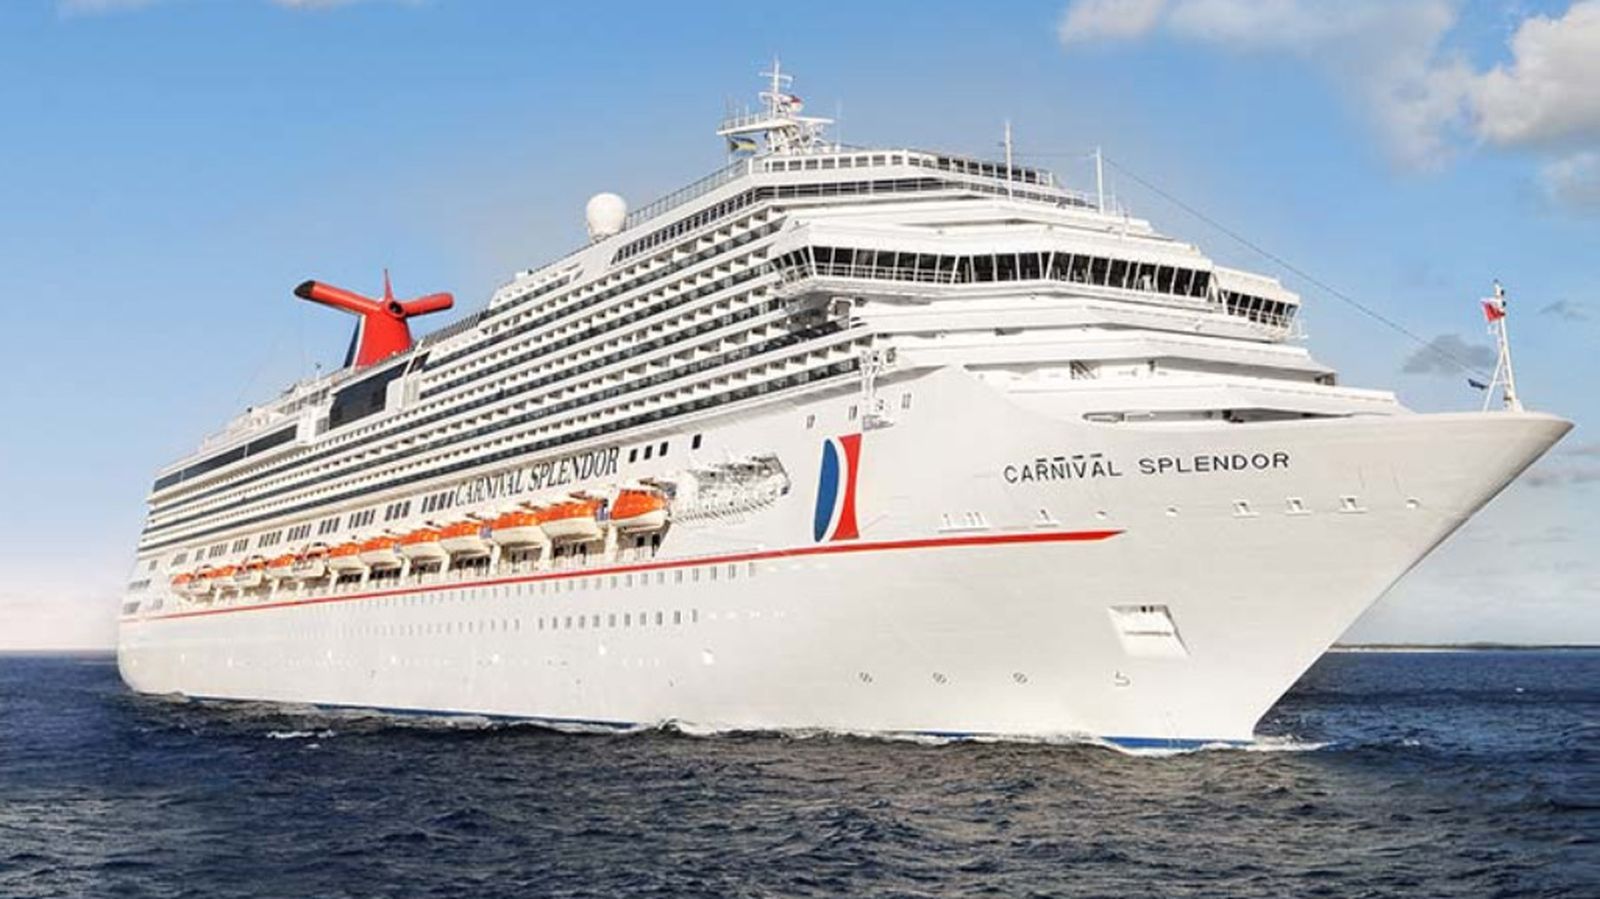 Lesbian cruise. Carnival Splendor. Ship Horn. L'Austral Cruise ship.